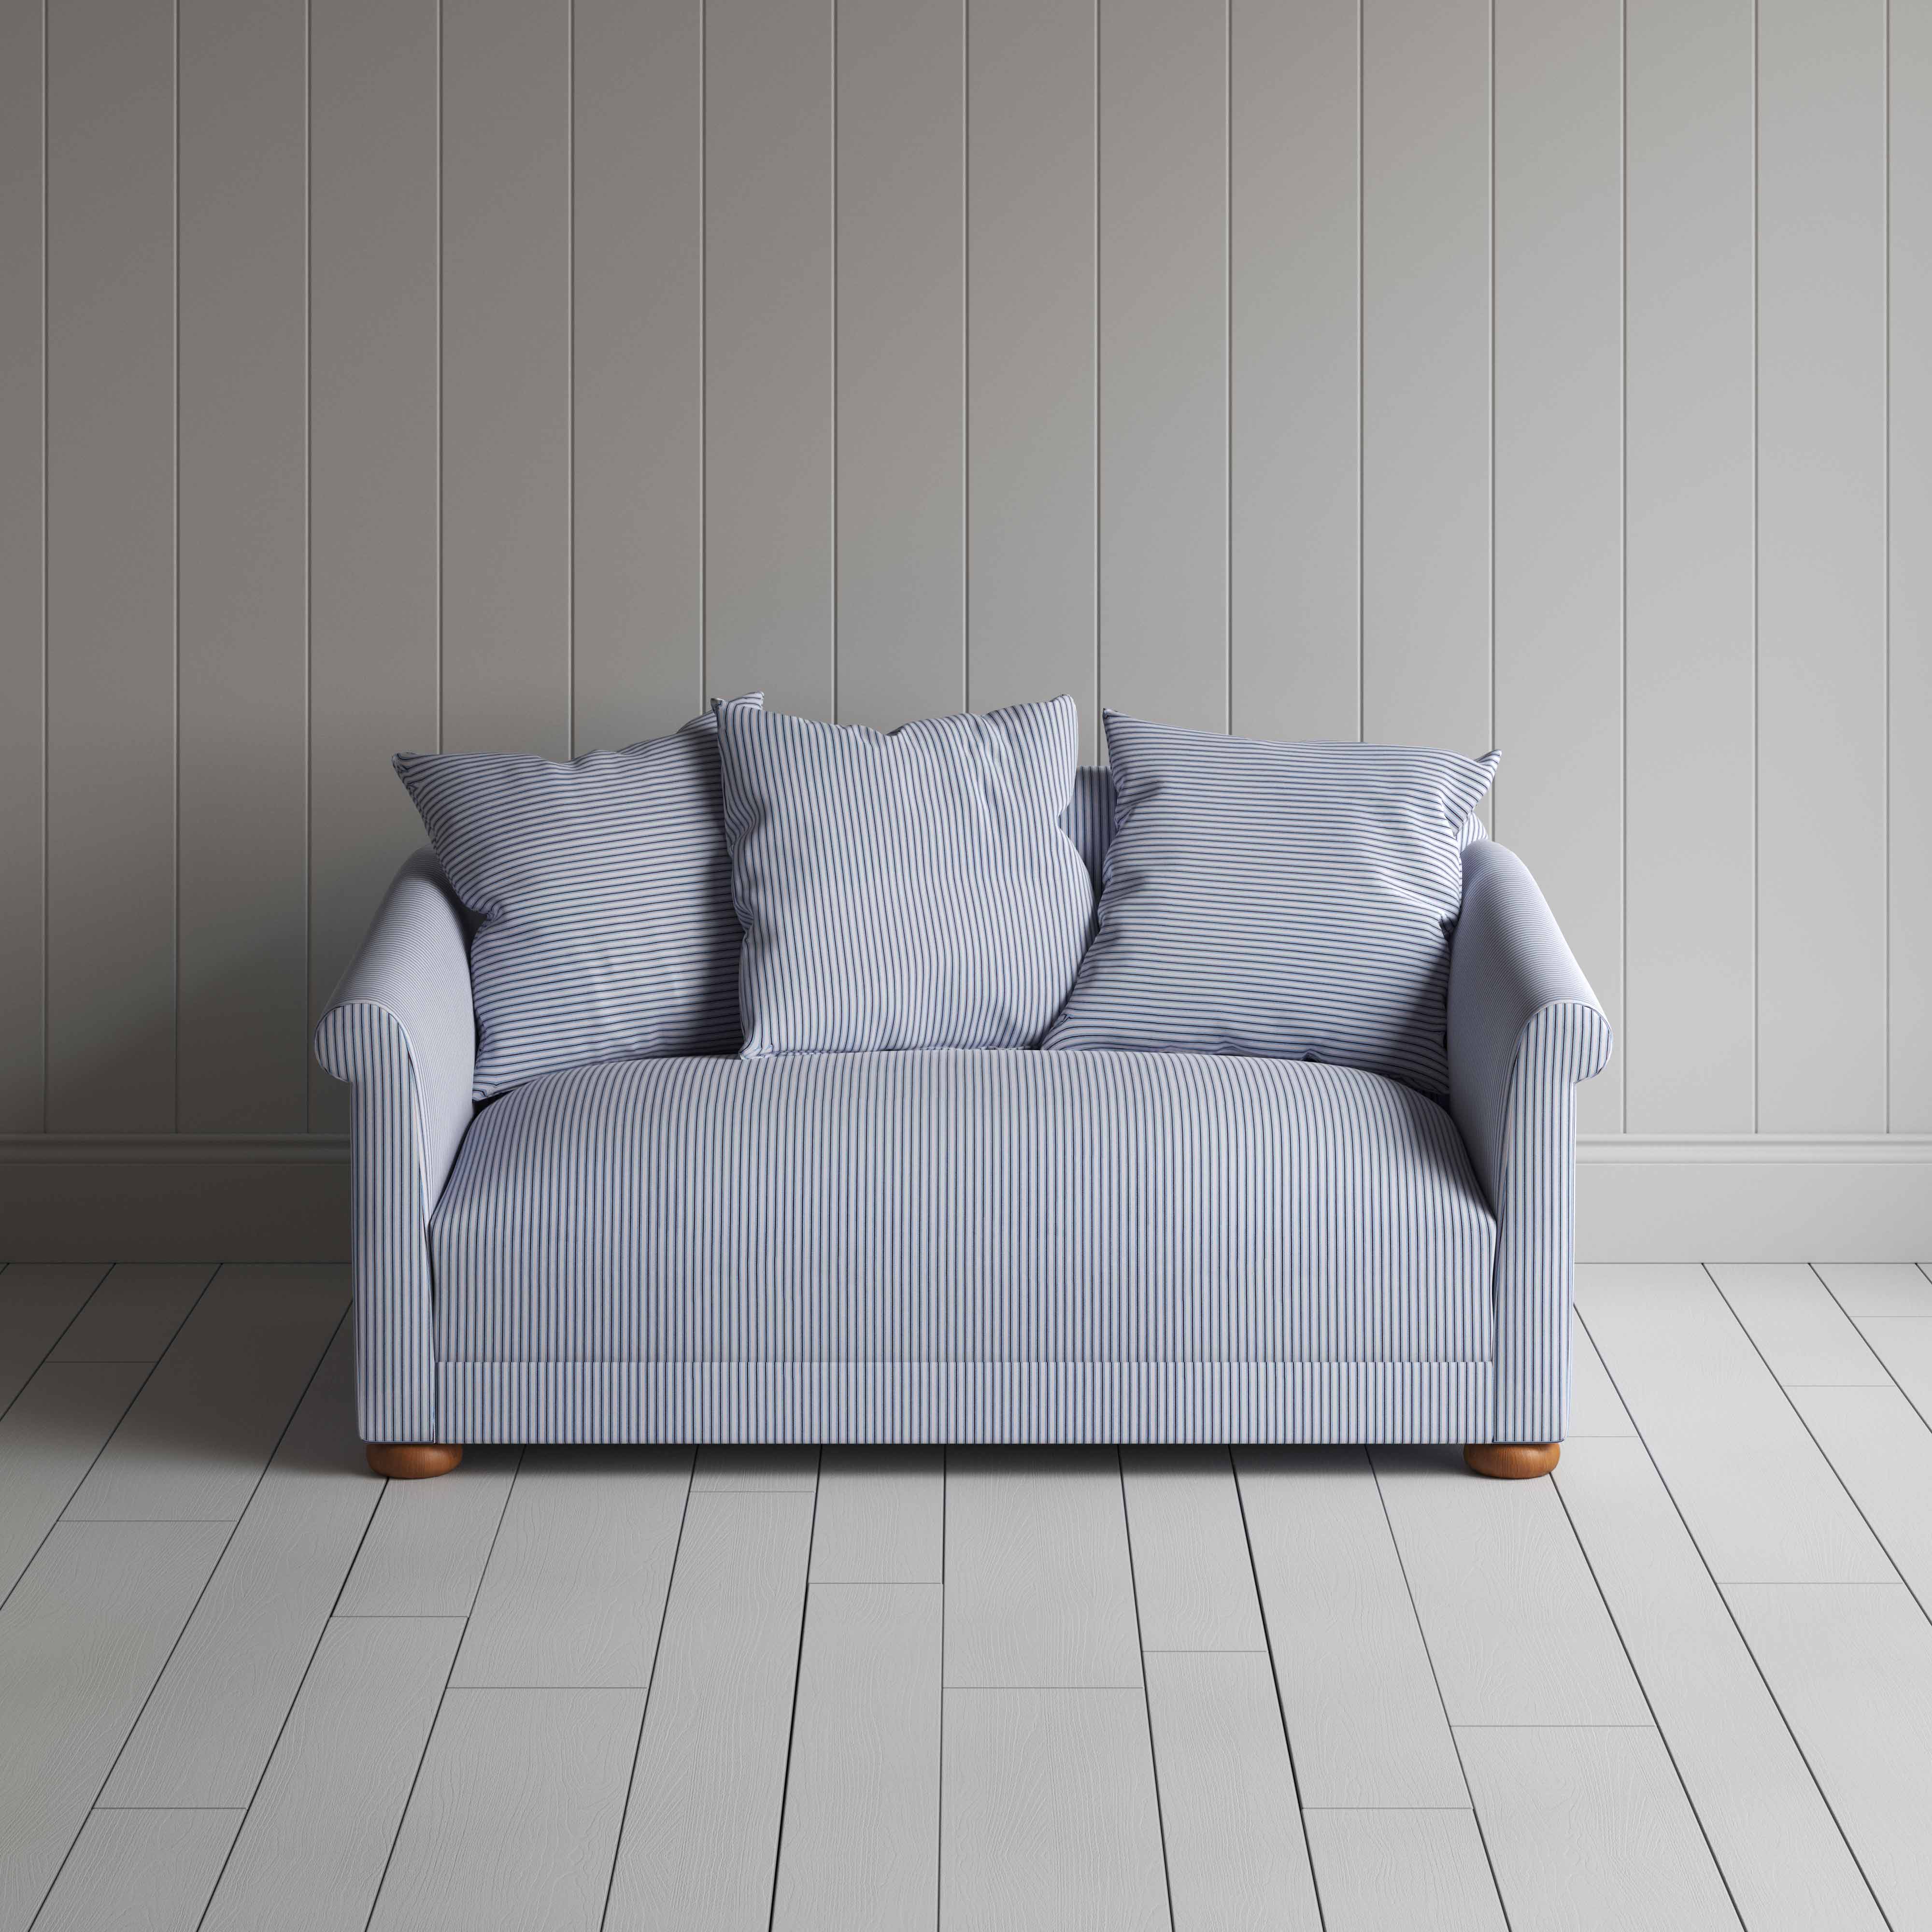  More the Merrier 2 Seater Sofa in Ticking Cotton, Aqua Brown - Nicola Harding 